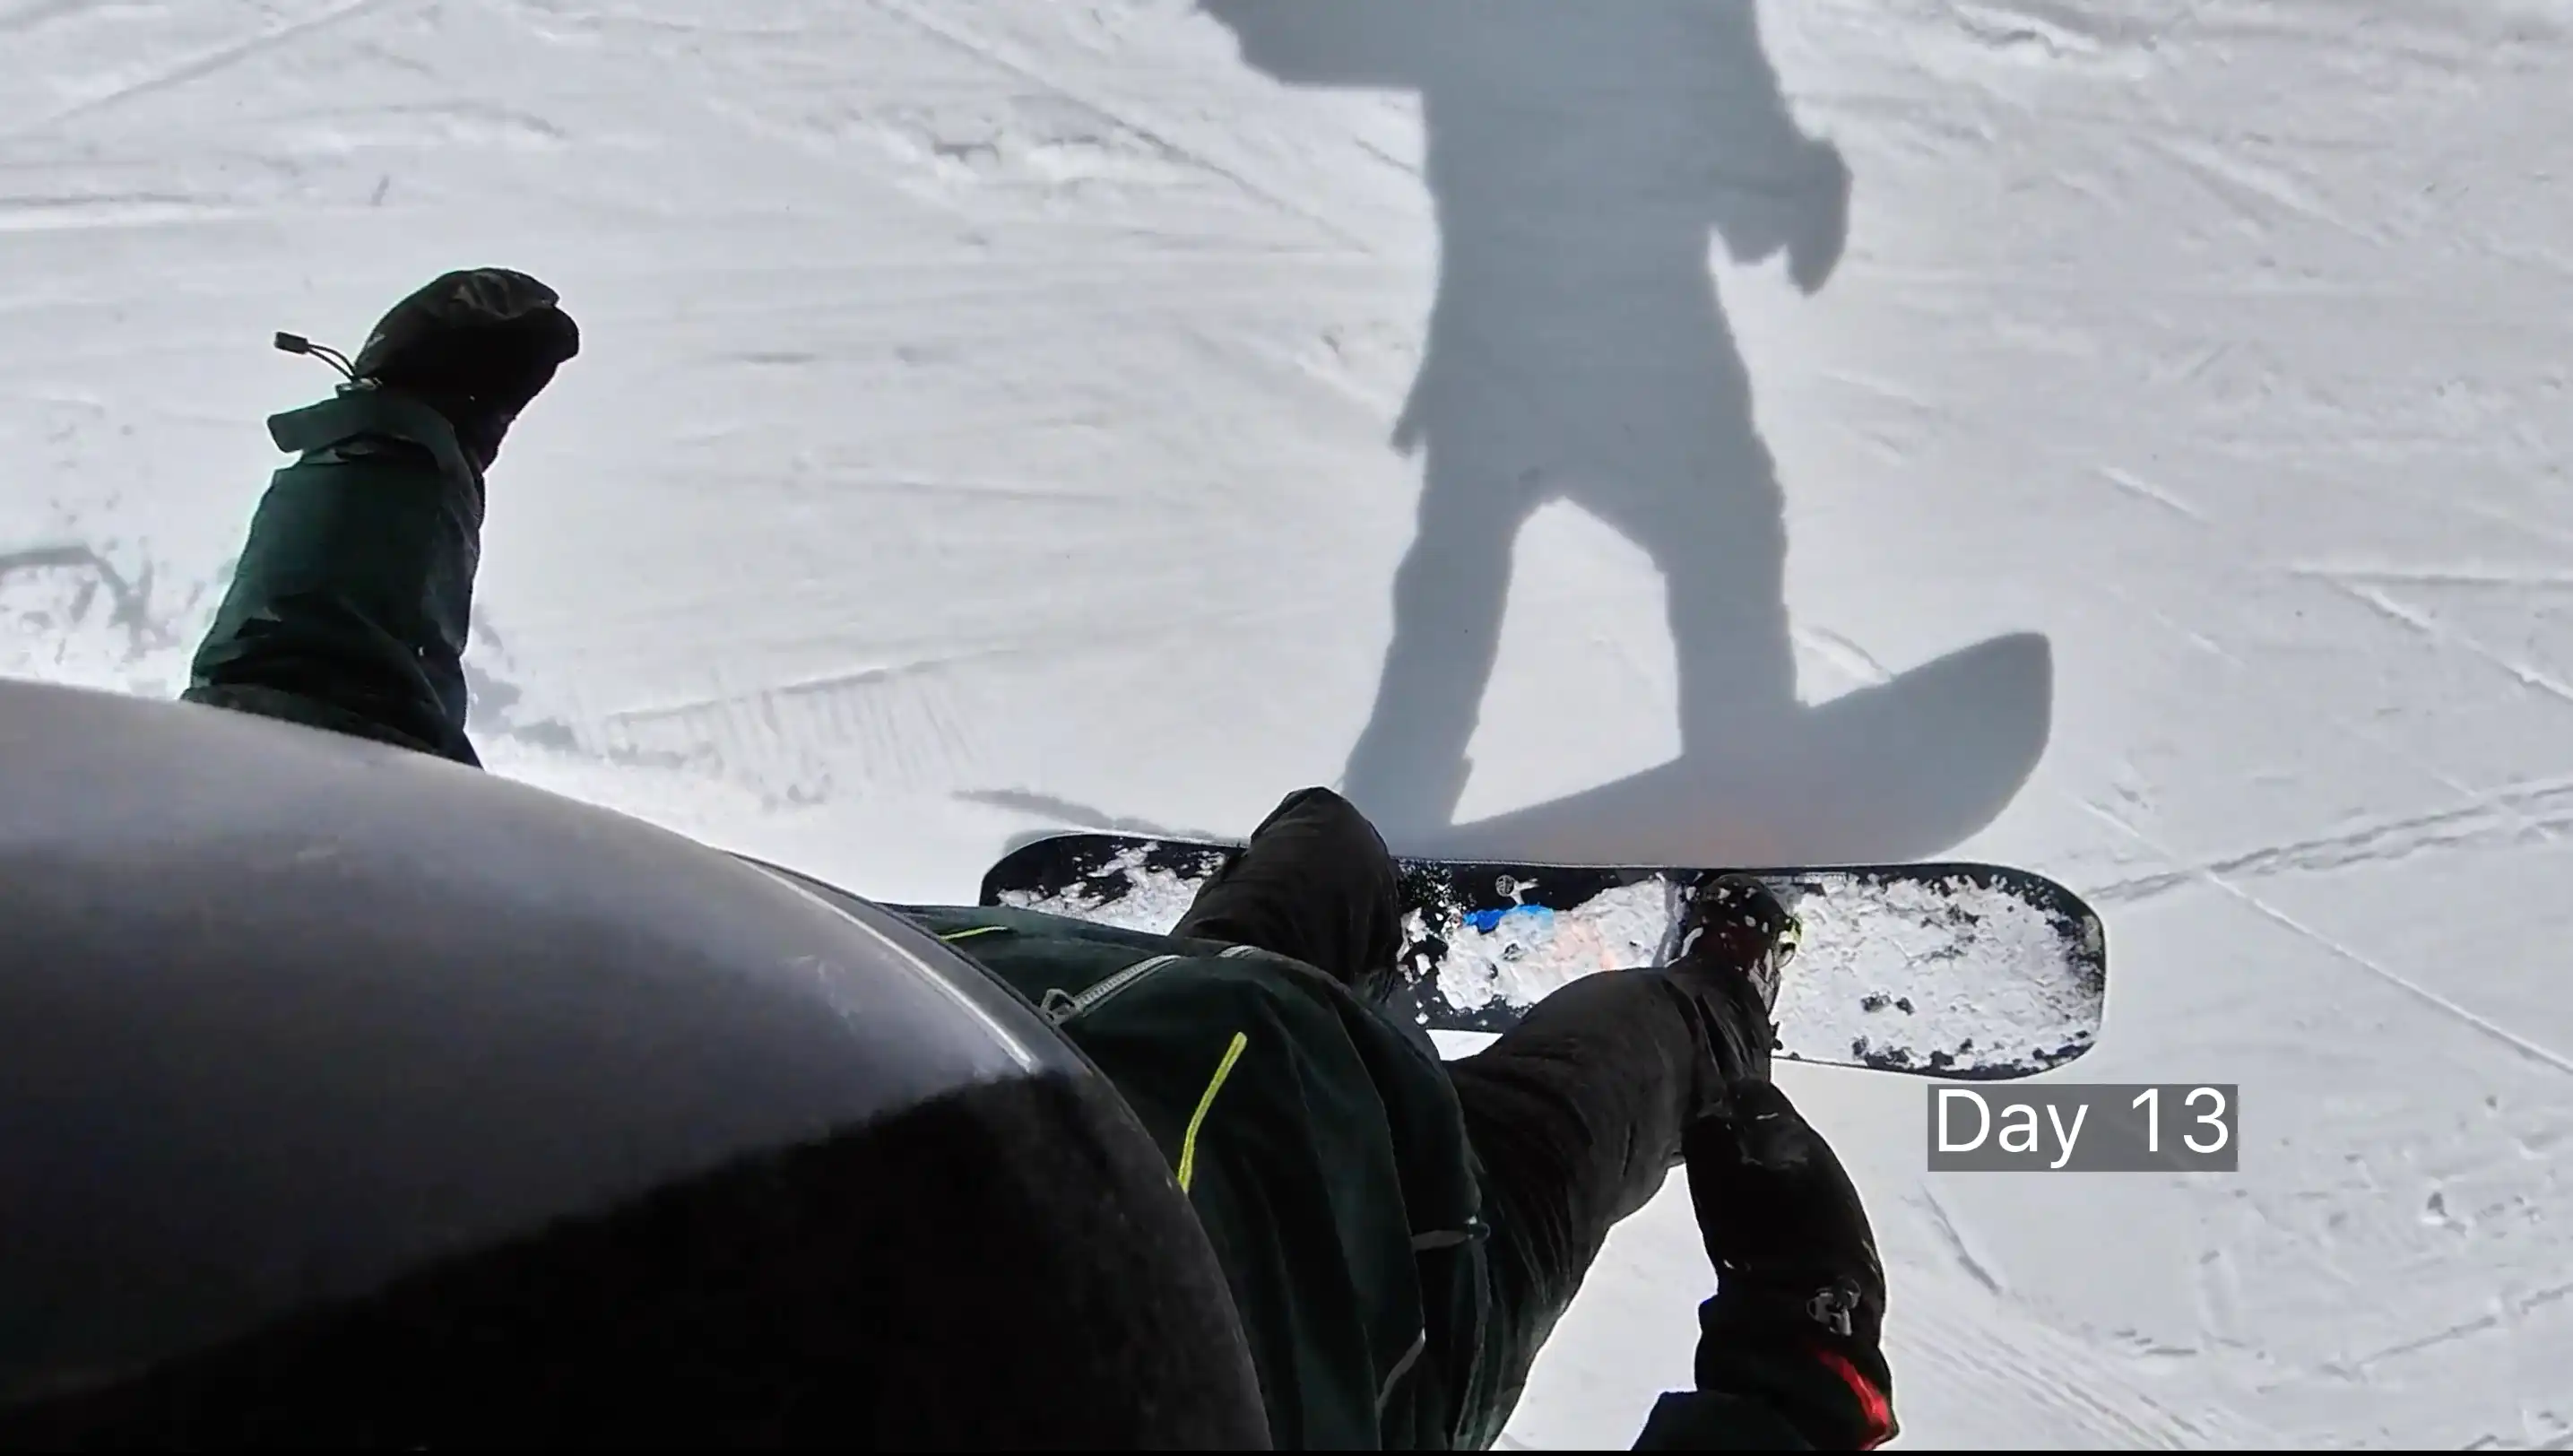 Snowboarding POV with shadow